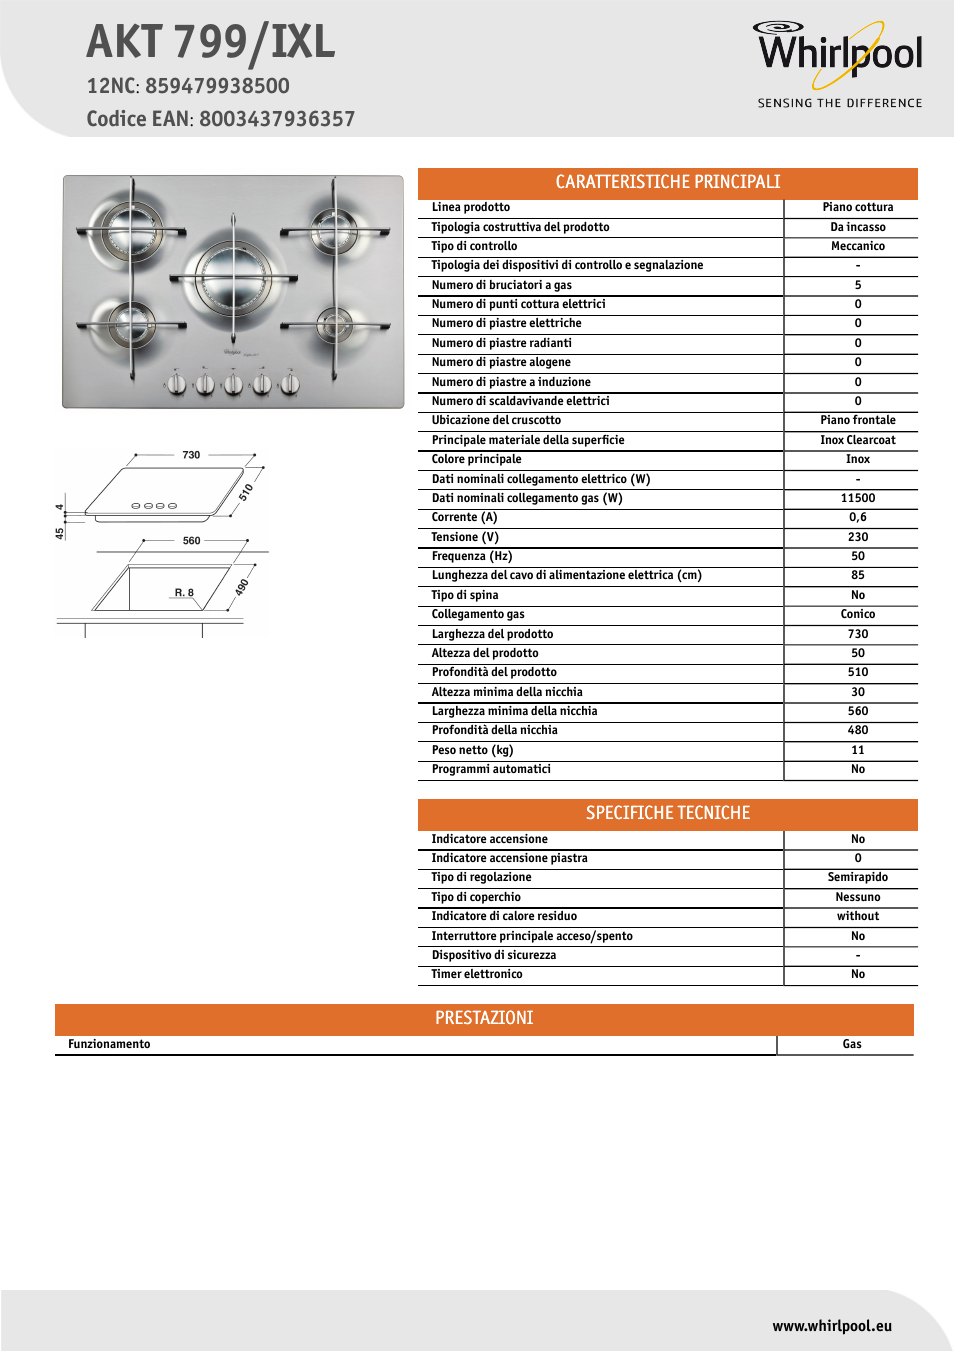 Whirlpool AKT 799-IXL Manuale d'uso | Pagine: 1